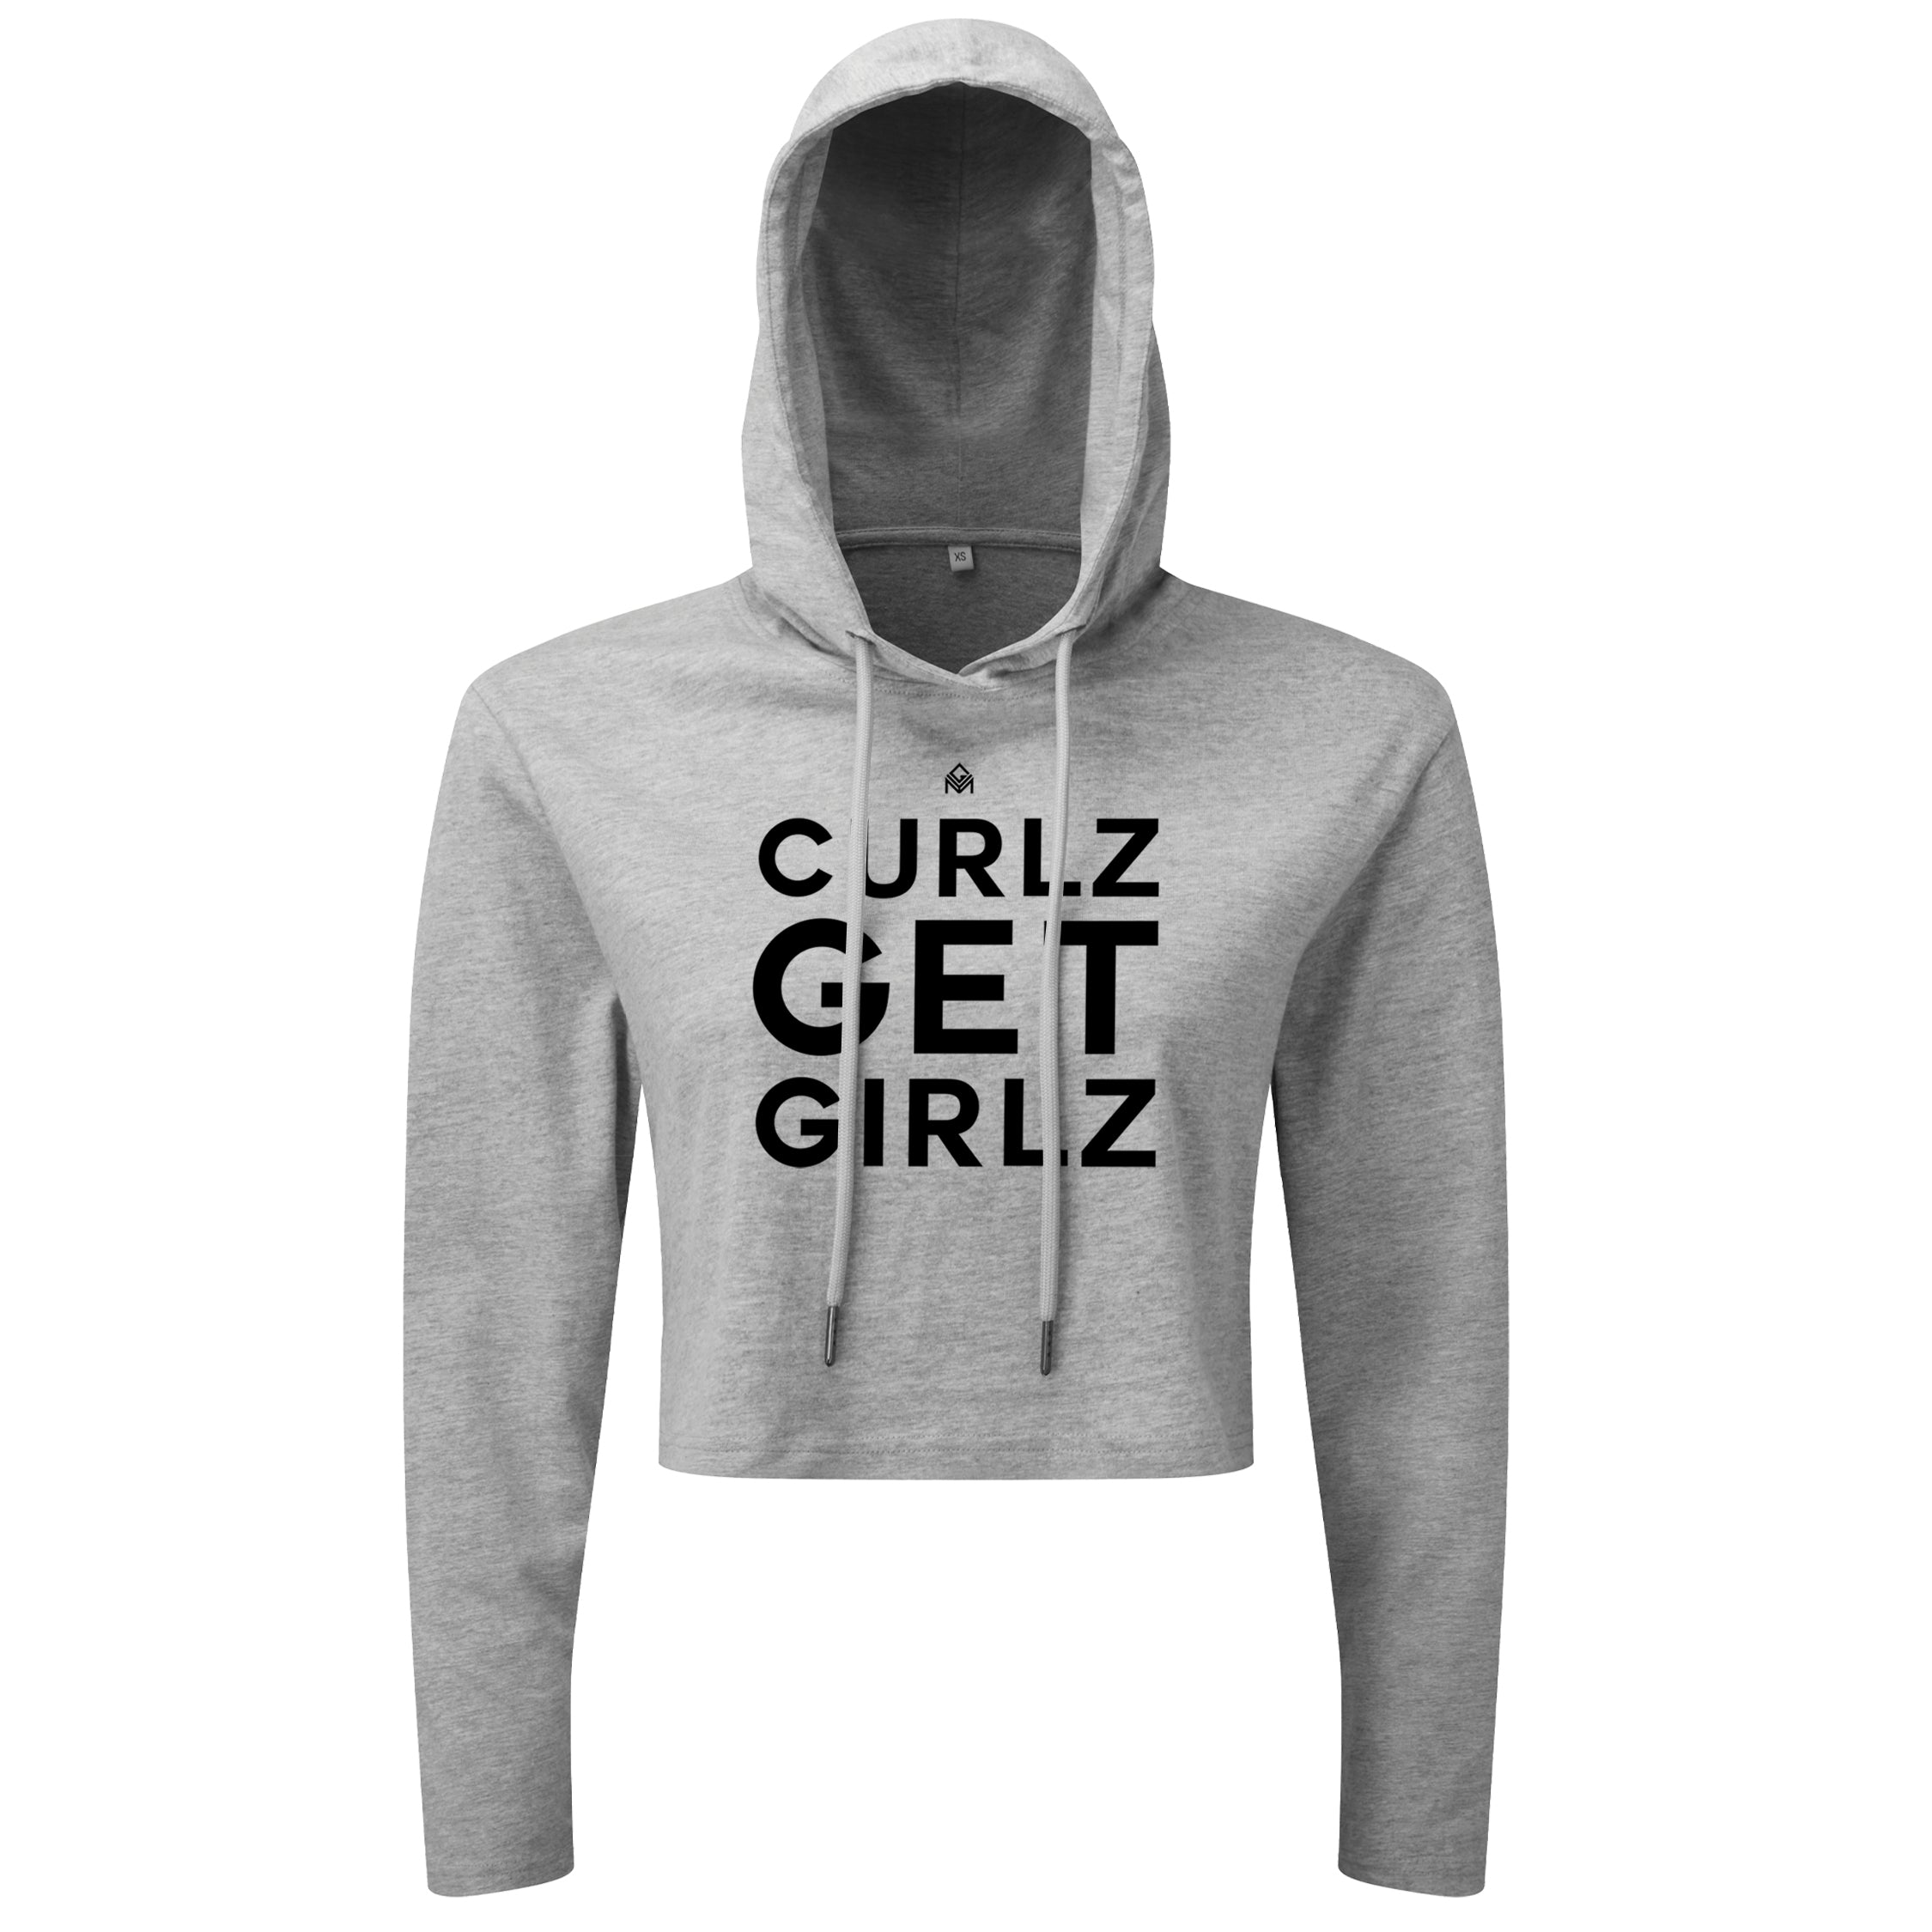 Curlz Get Girlz - Cropped Hoodie